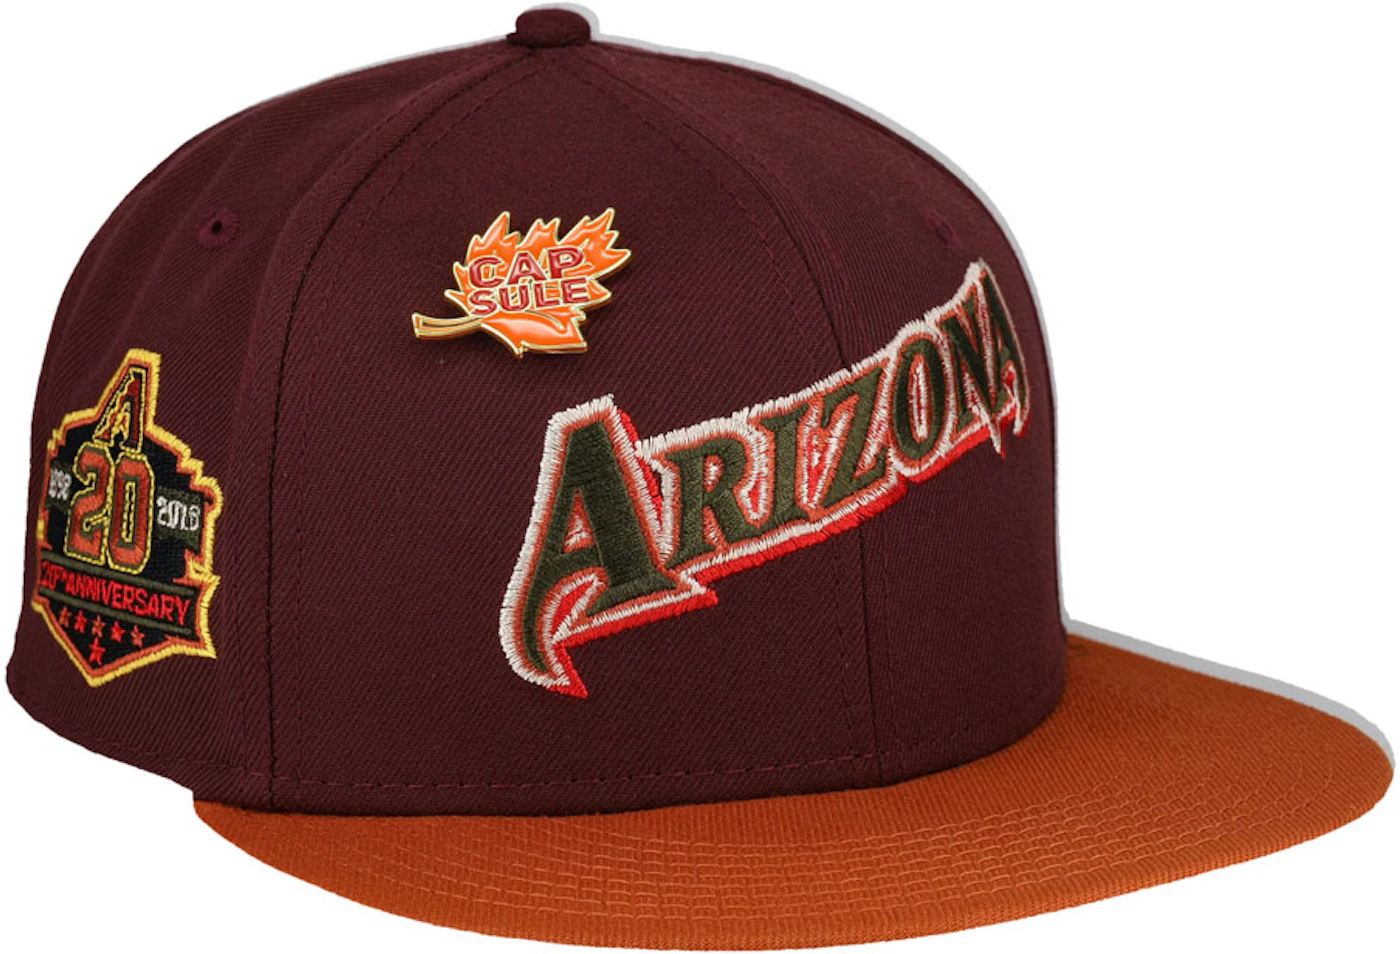 Arizona Diamondbacks Retro Classic Collection 59fifty Fitted Hat Size 7